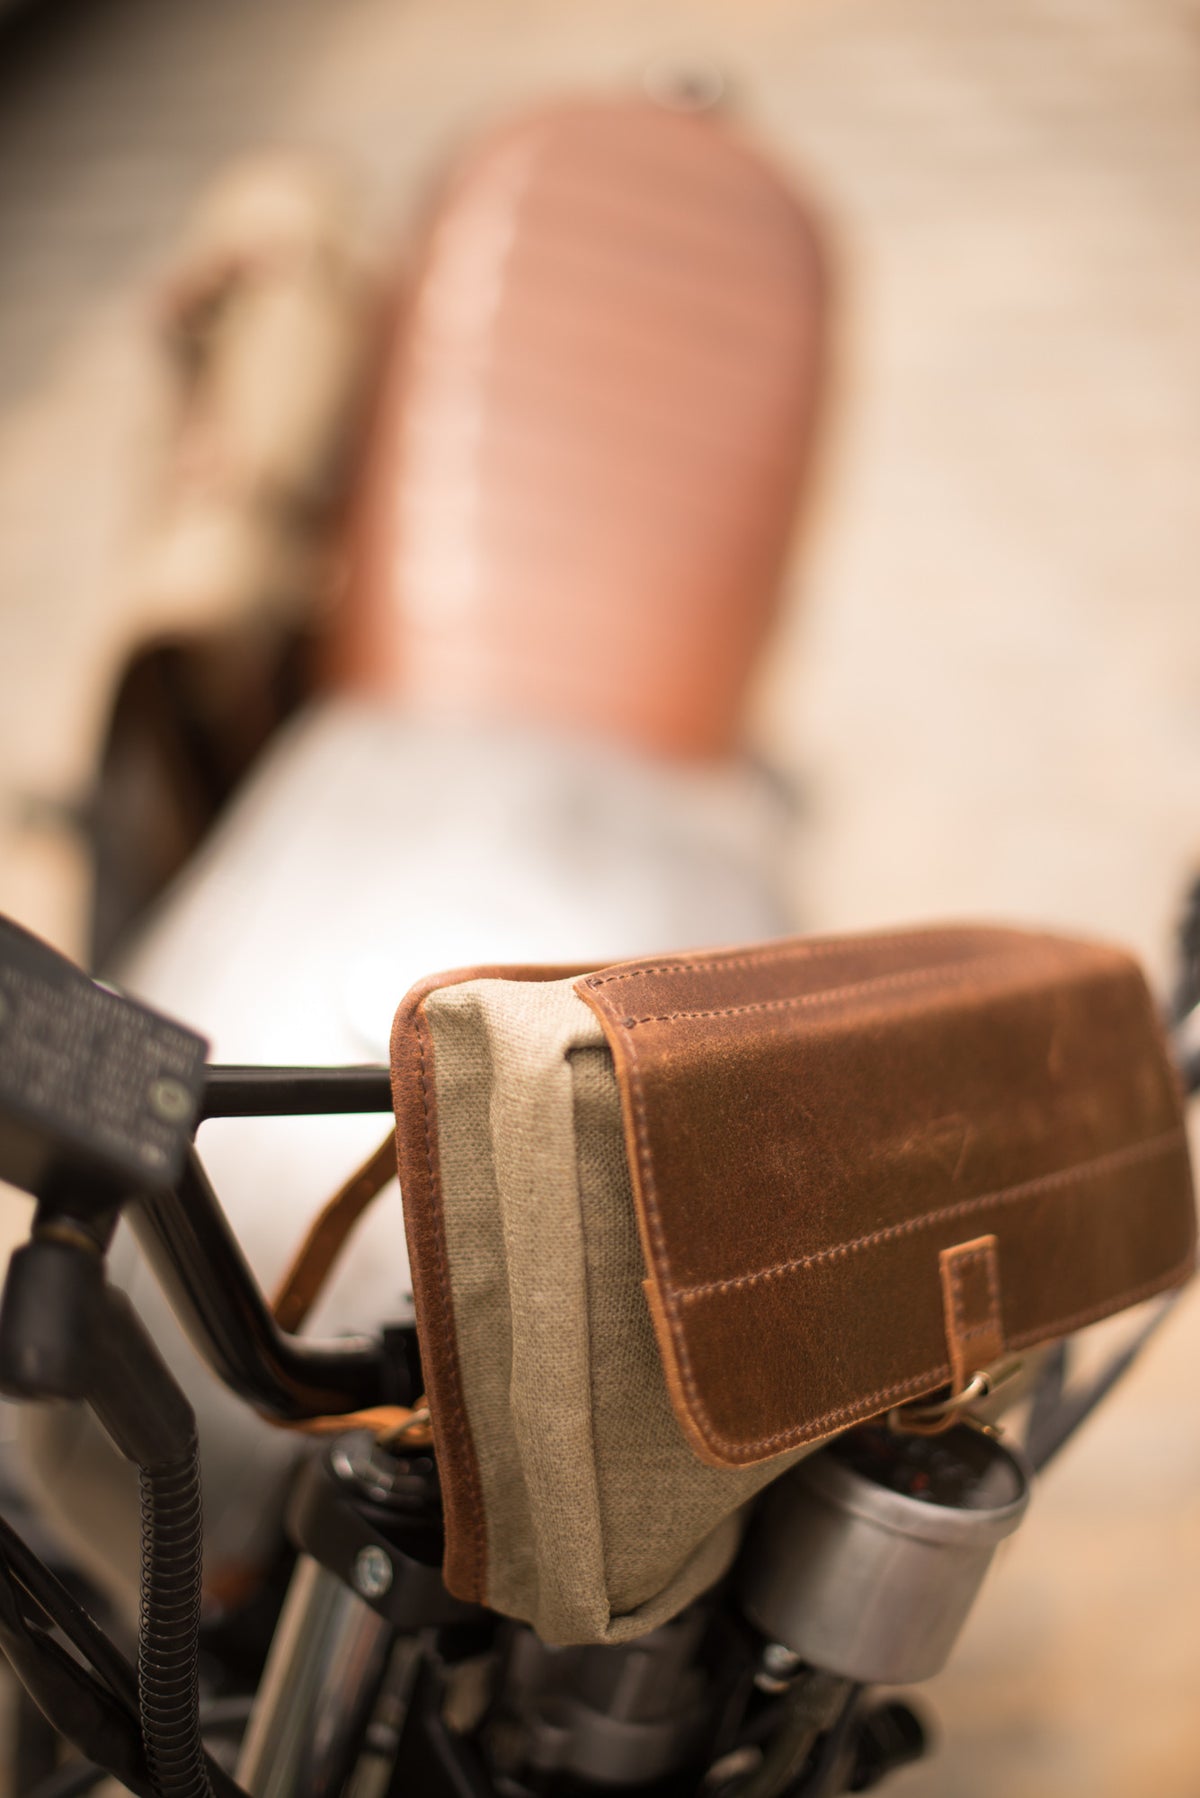 Mini Moto Bag - small motorcycle pannier bag